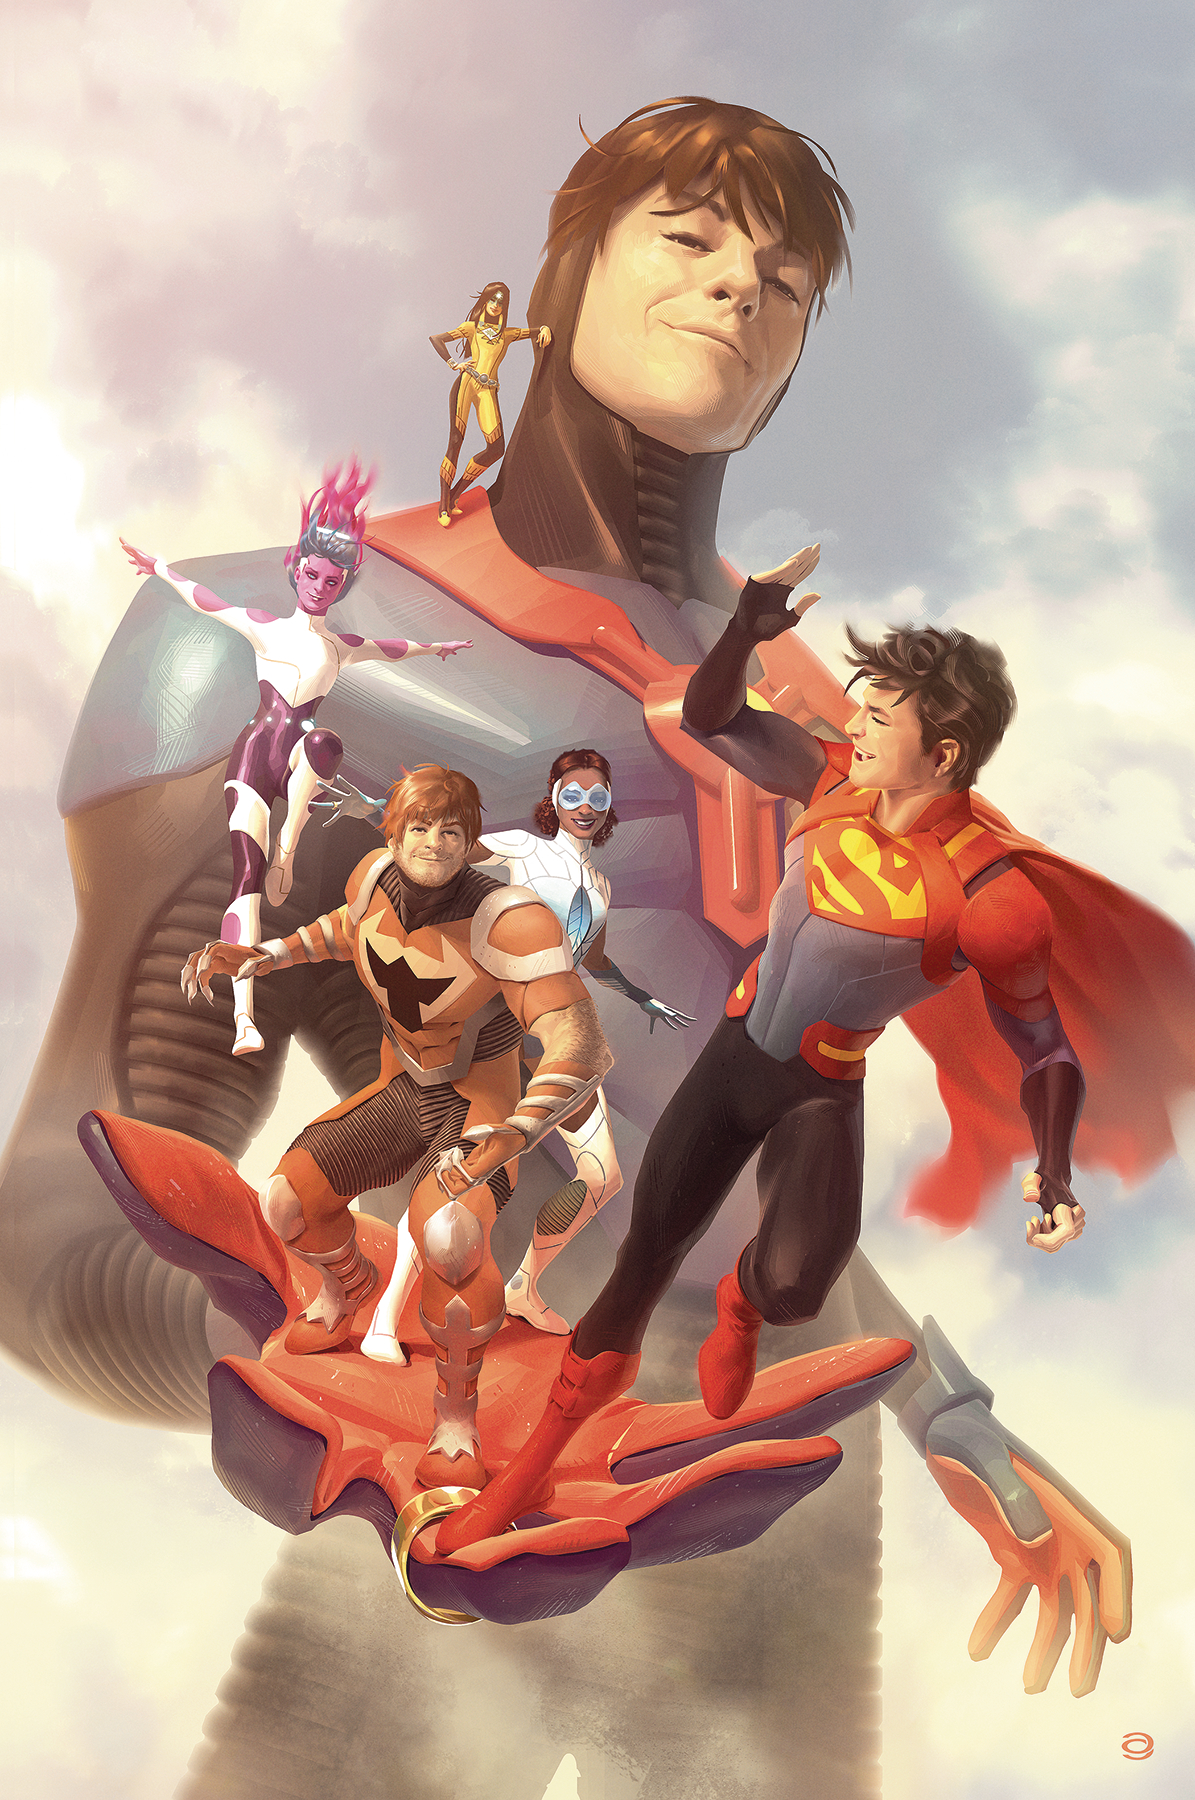 Legion of Super-Heroes Art